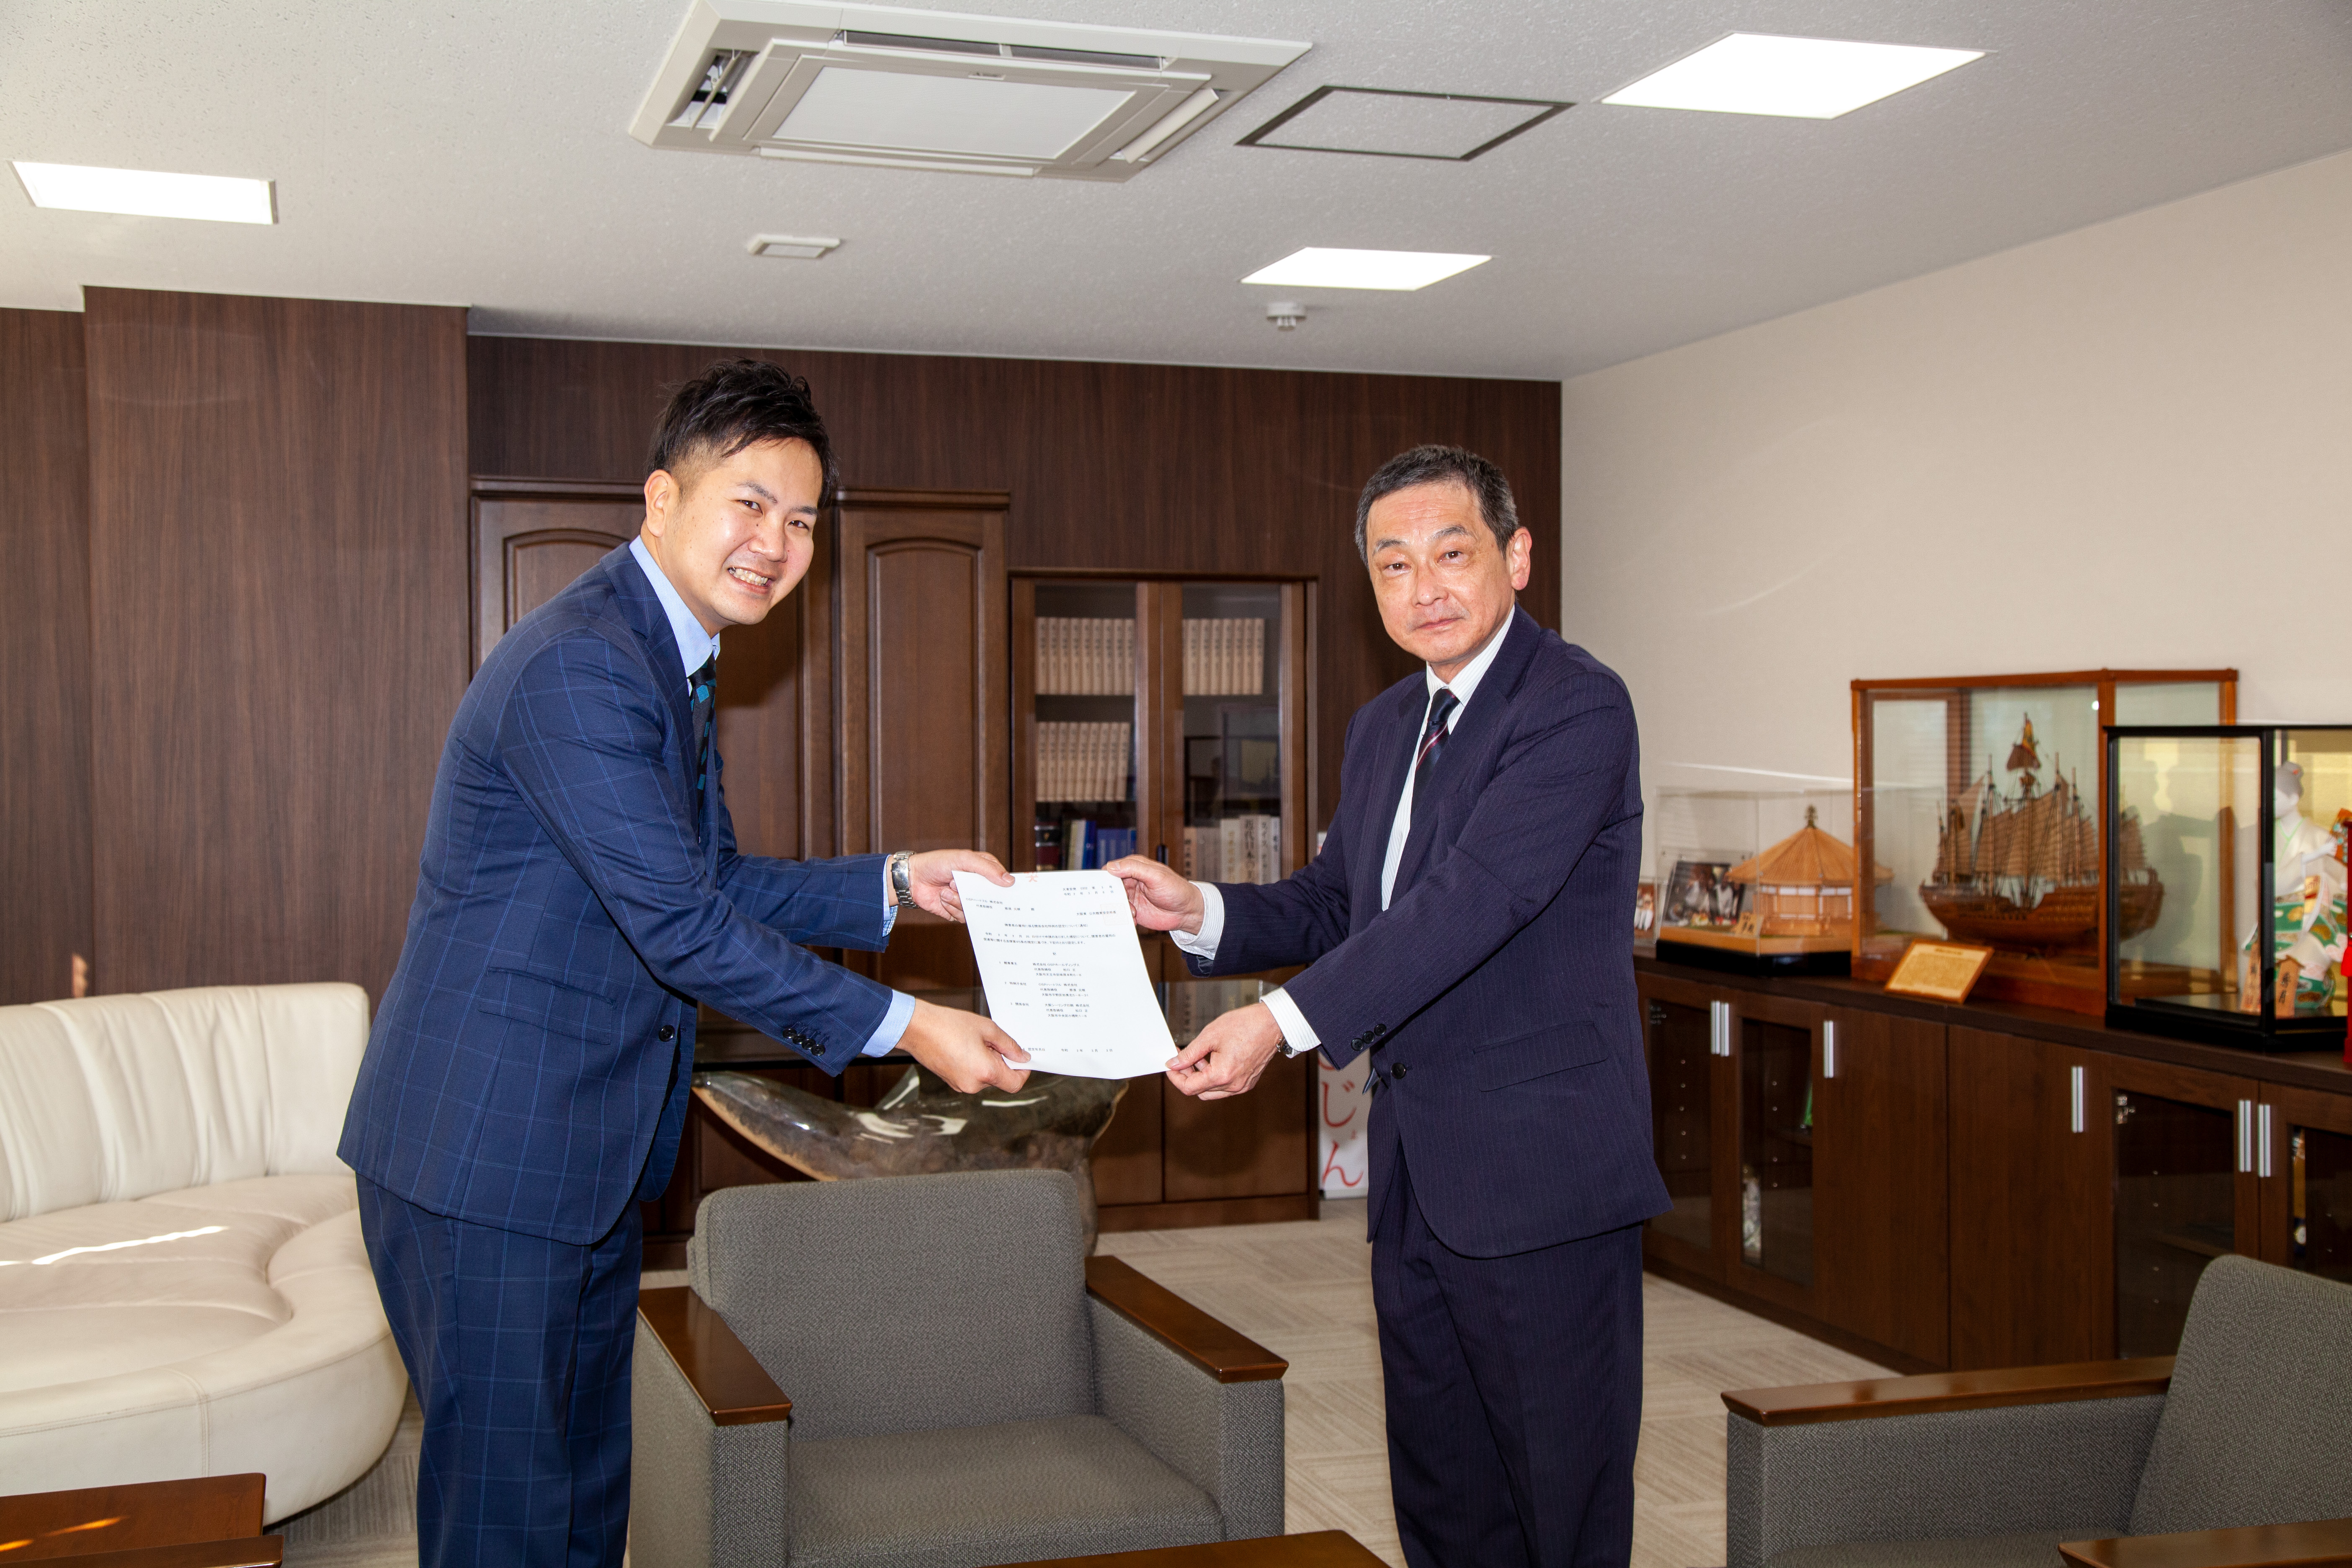 President Nasu receiving the certificate